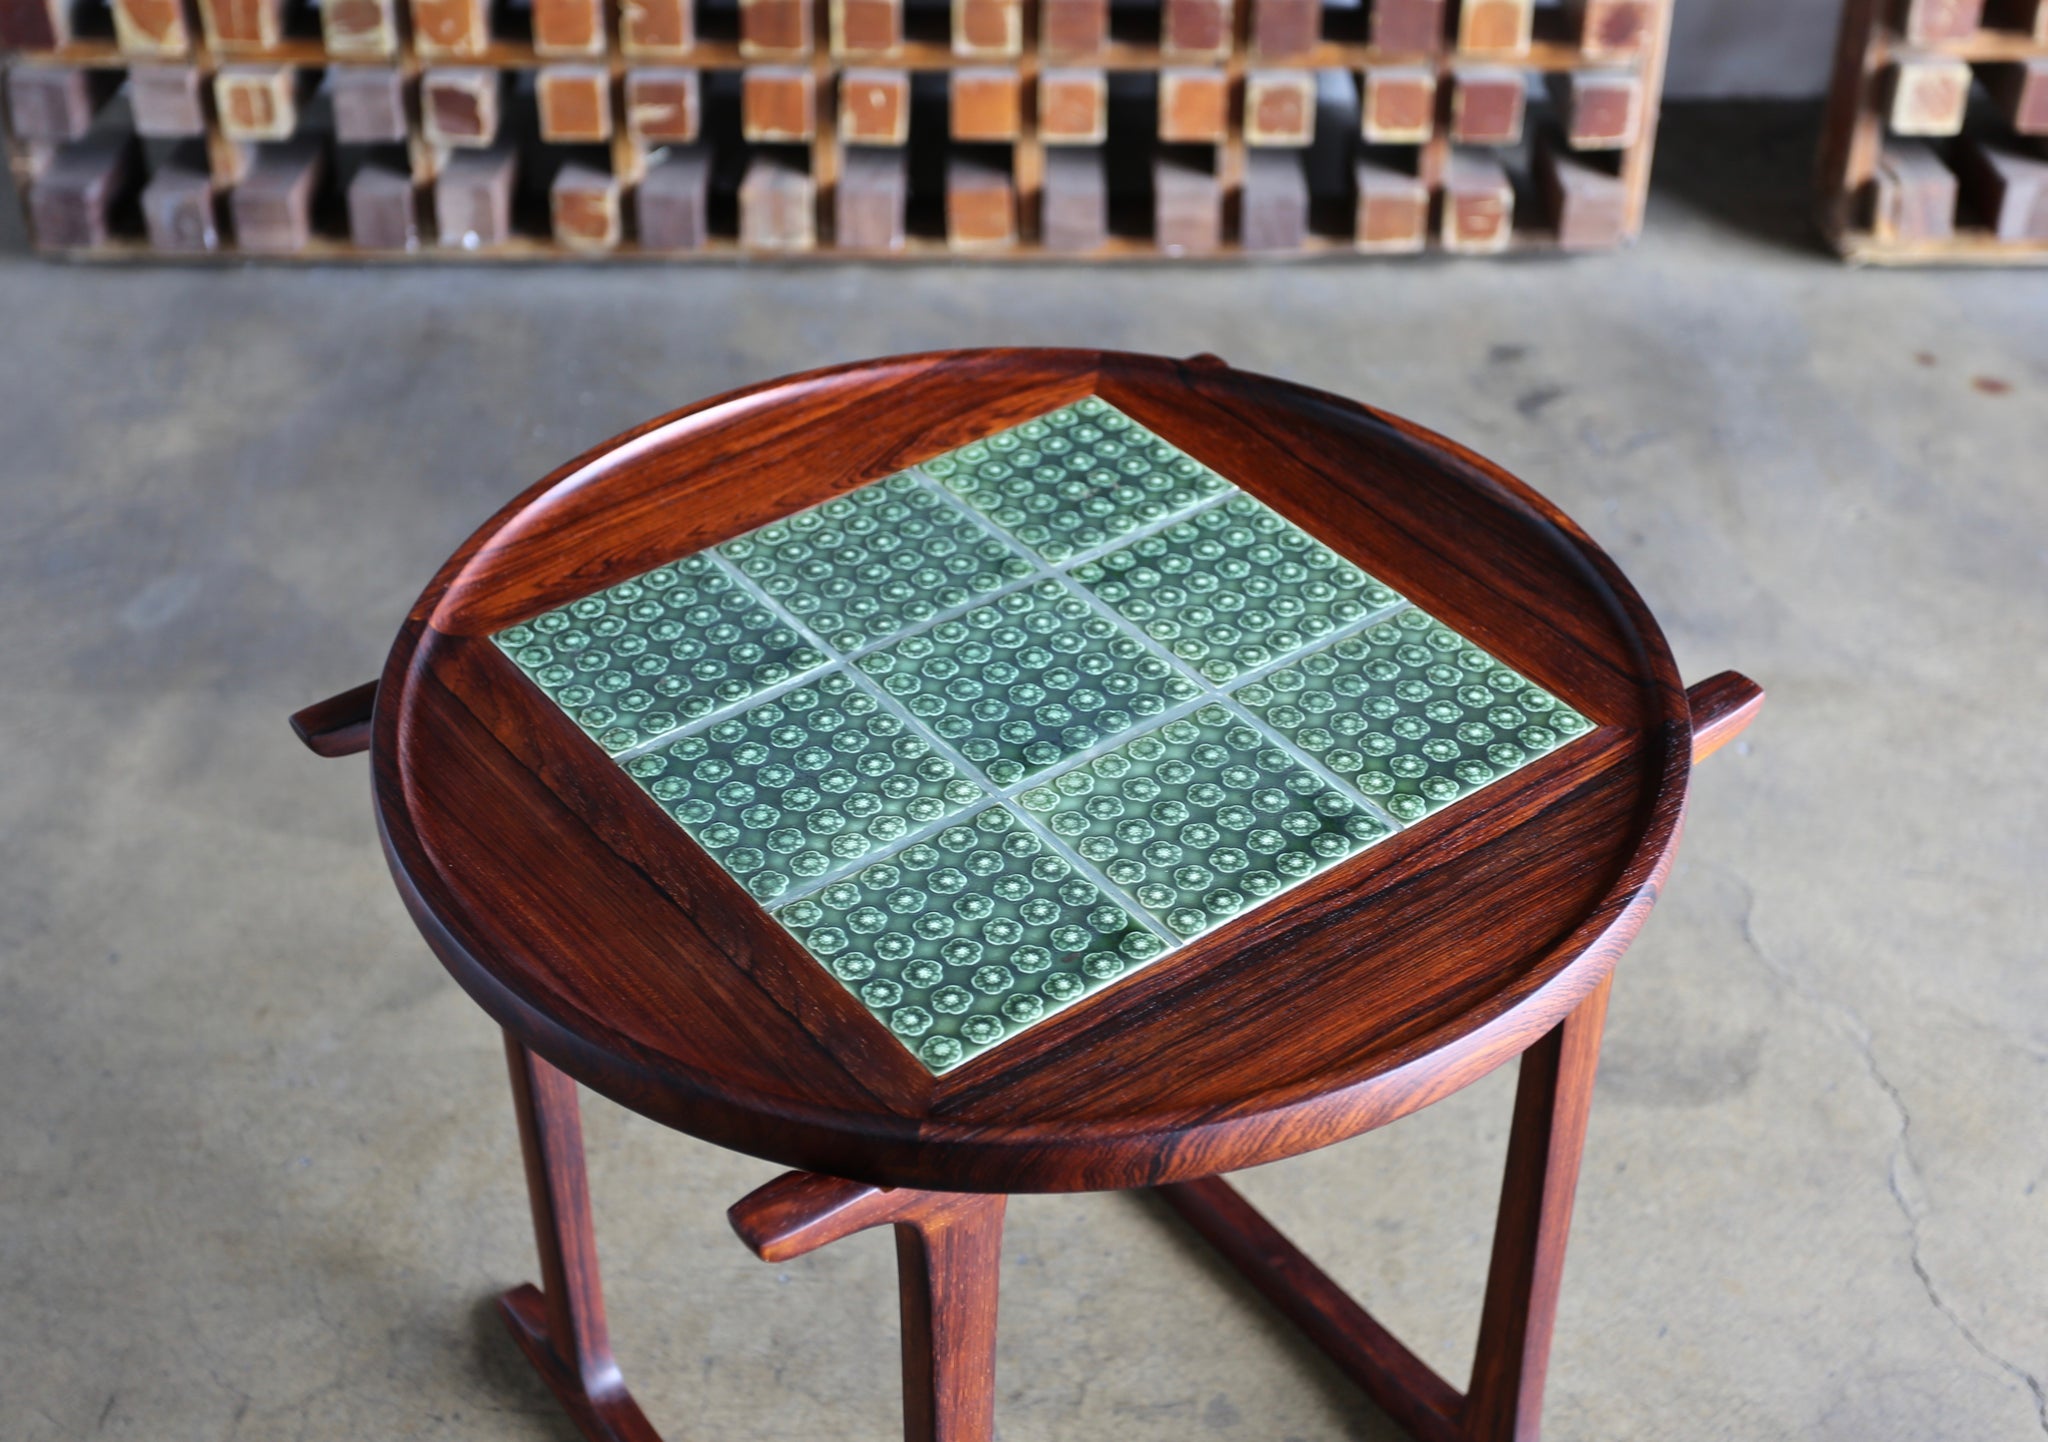 = SOLD = Jens Quistgaard Rosewood & Tile Side Table for Richard Nissen circa 1966